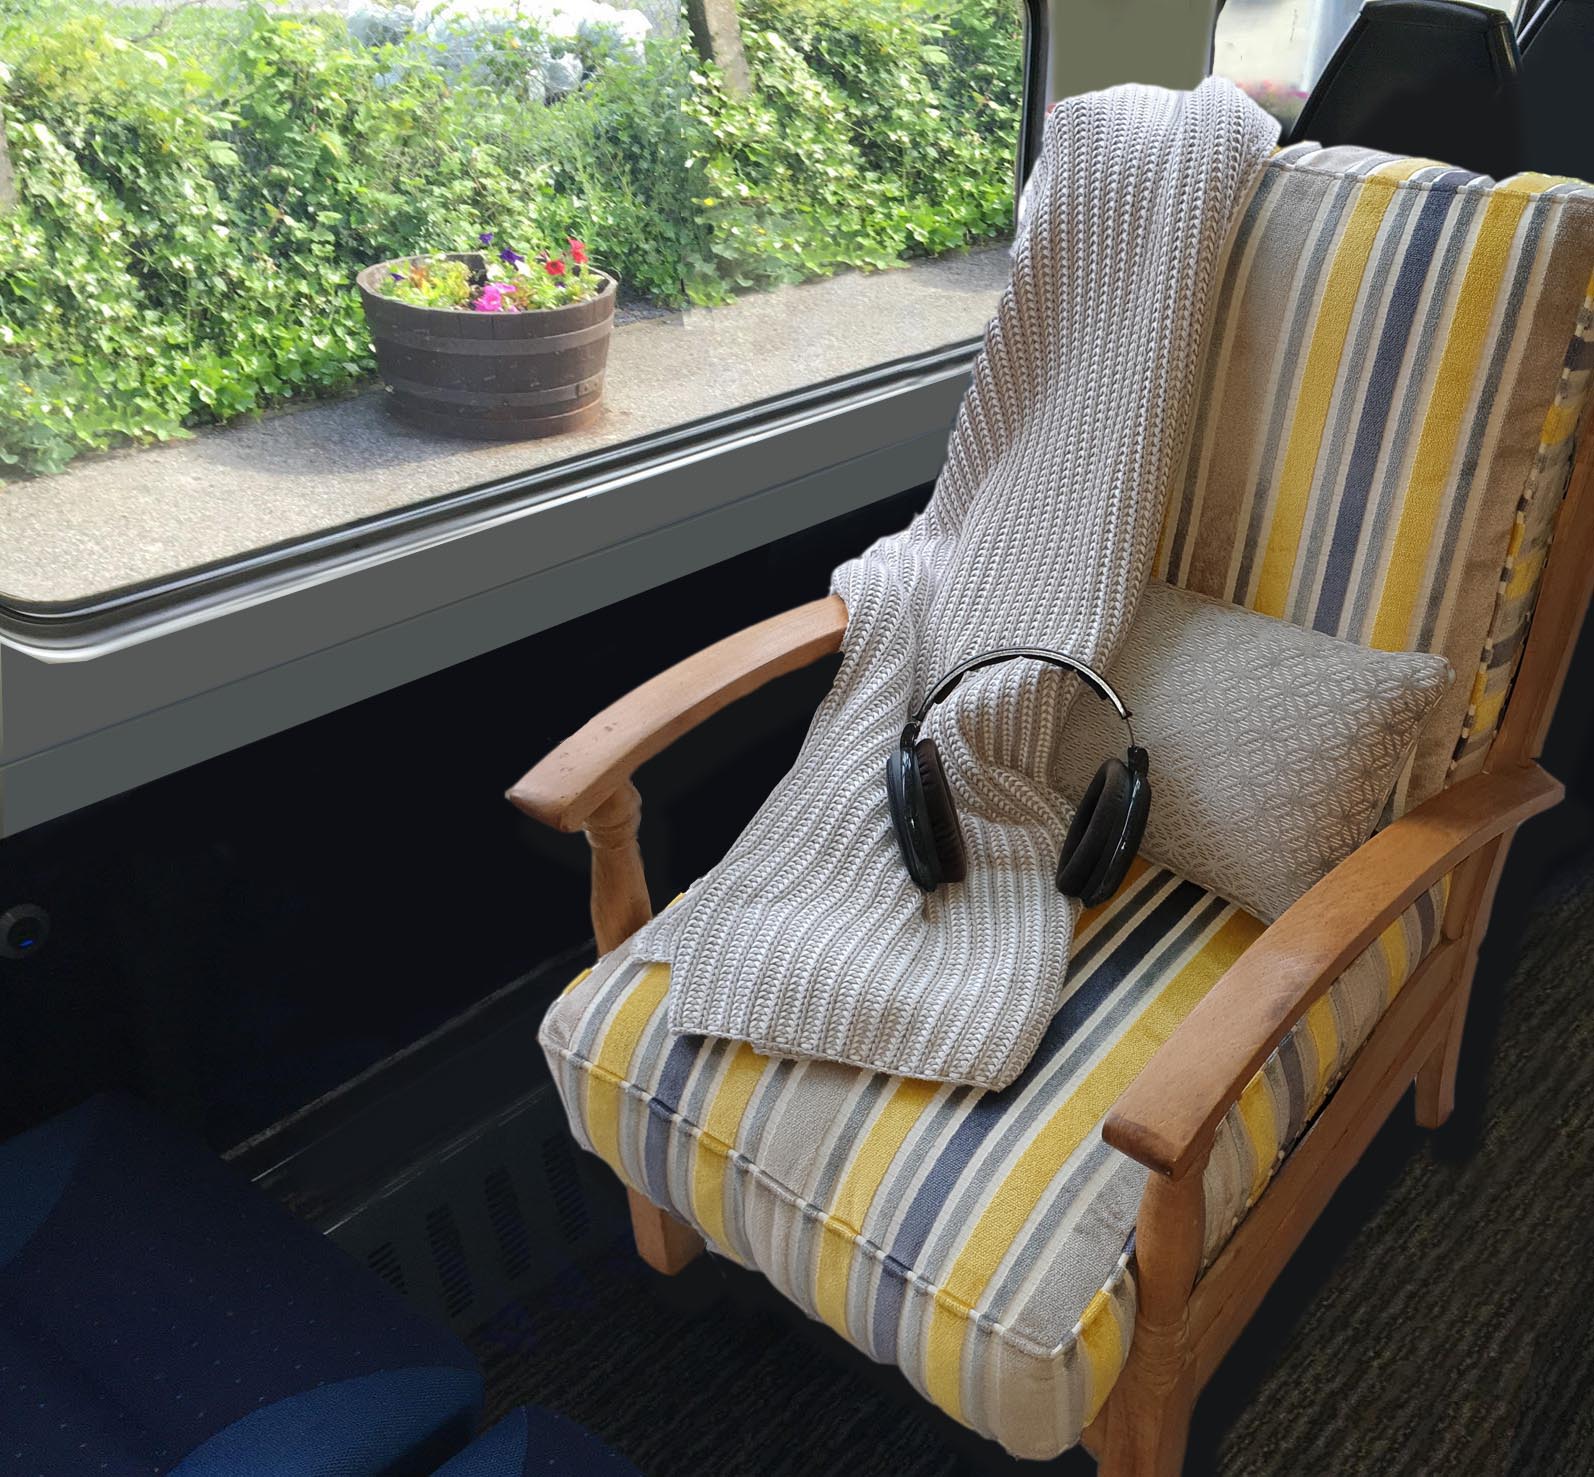 Chair on a train